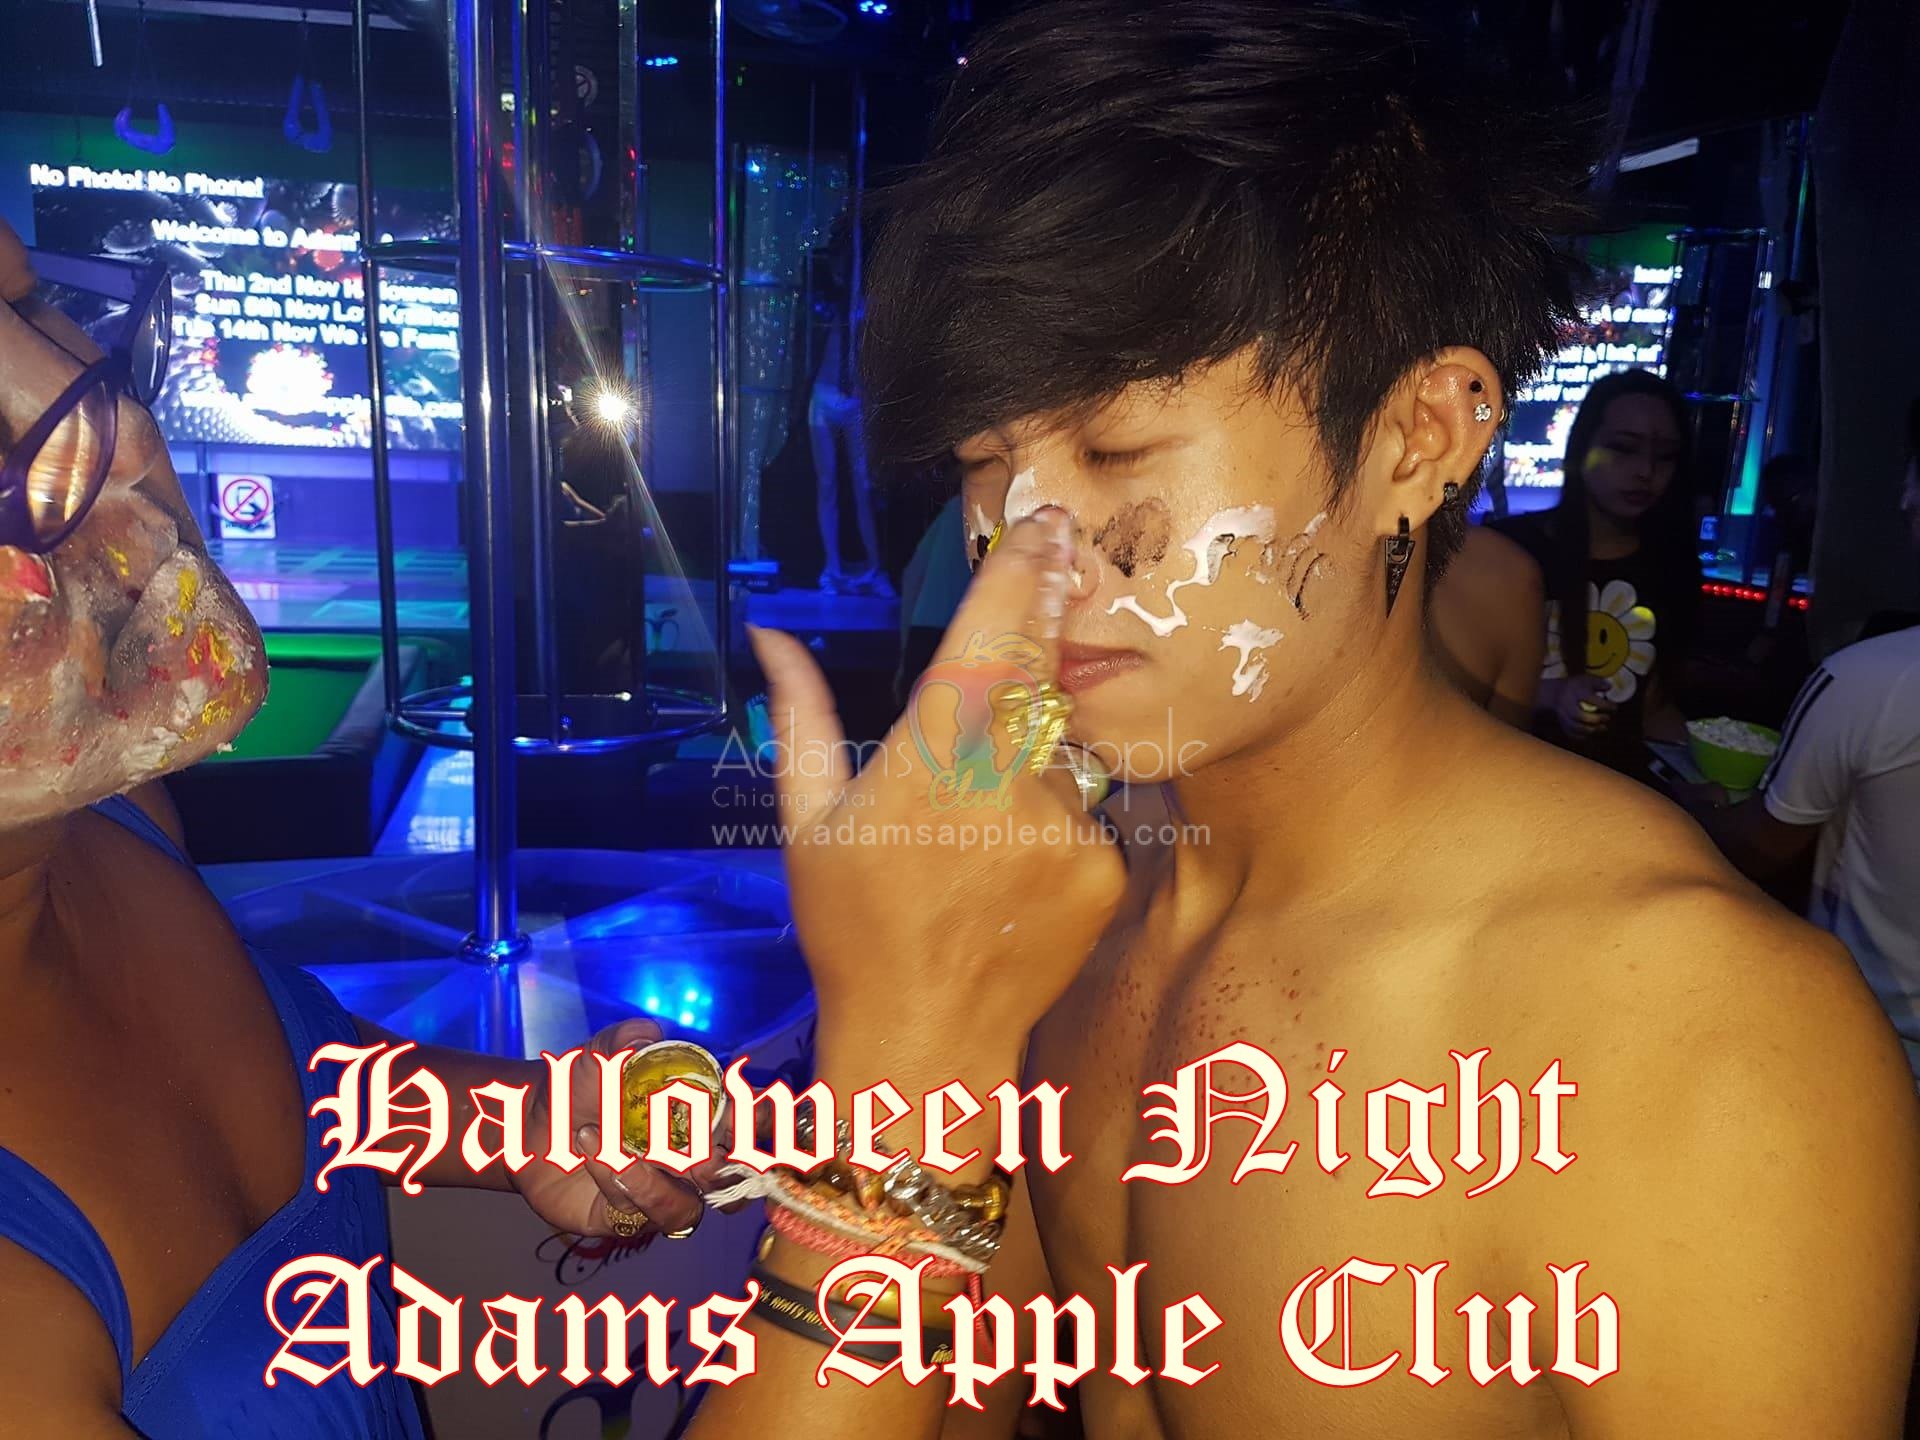 Adams Apple Club Chiang Mai HALLOWEEN Party